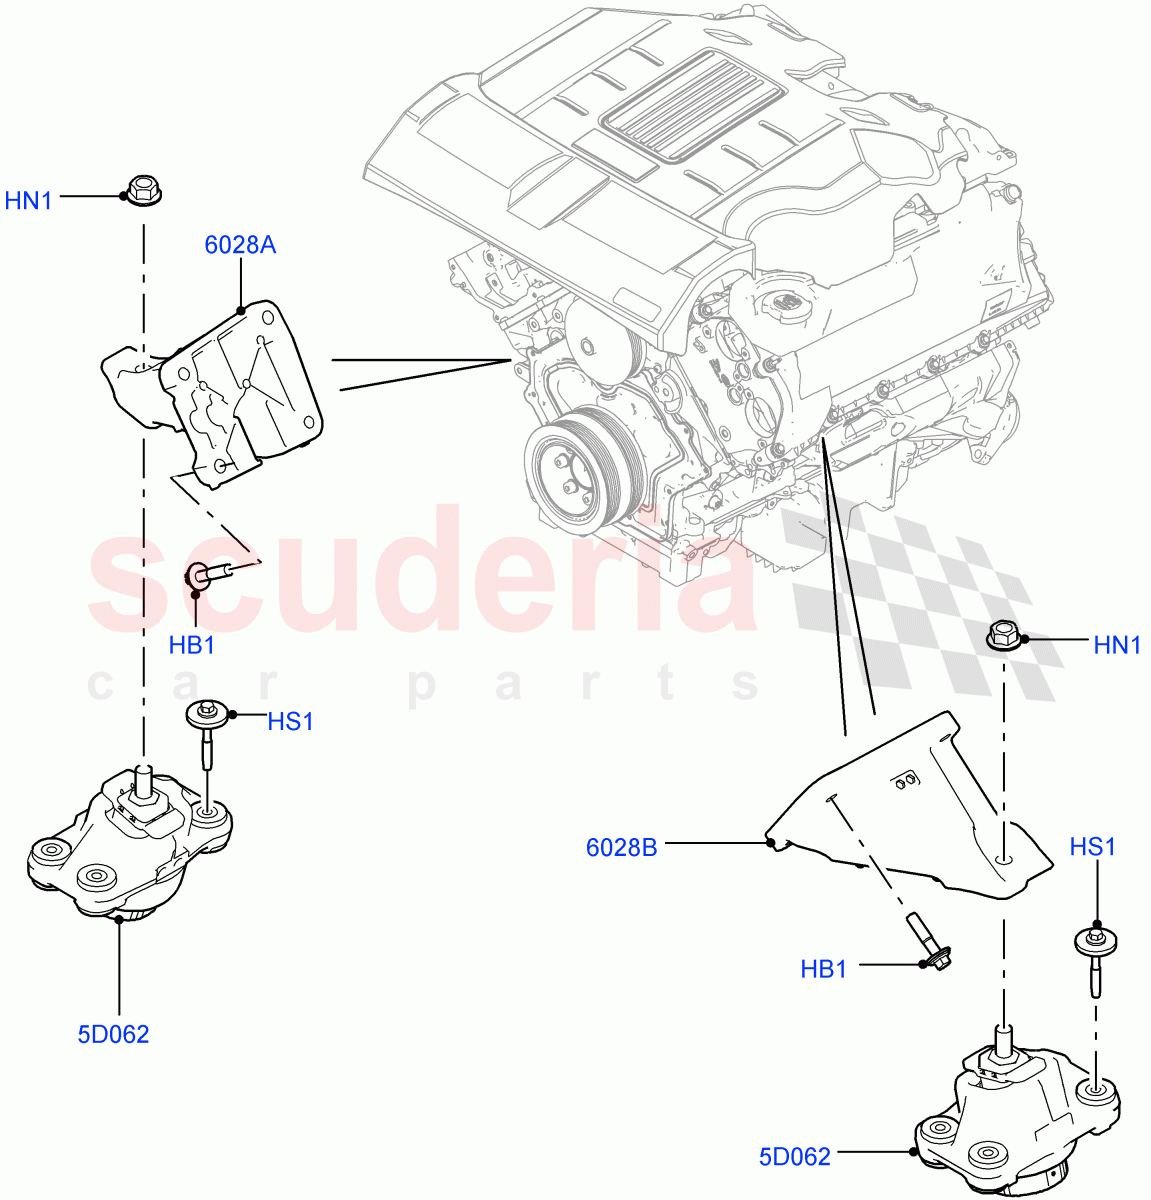 Engine Mounting(3.0L DOHC GDI SC V6 PETROL,5.0L OHC SGDI SC V8 Petrol - AJ133,5.0 Petrol AJ133 DOHC CDA,5.0L P AJ133 DOHC CDA S/C Enhanced) of Land Rover Land Rover Range Rover Sport (2014+) [4.4 DOHC Diesel V8 DITC]